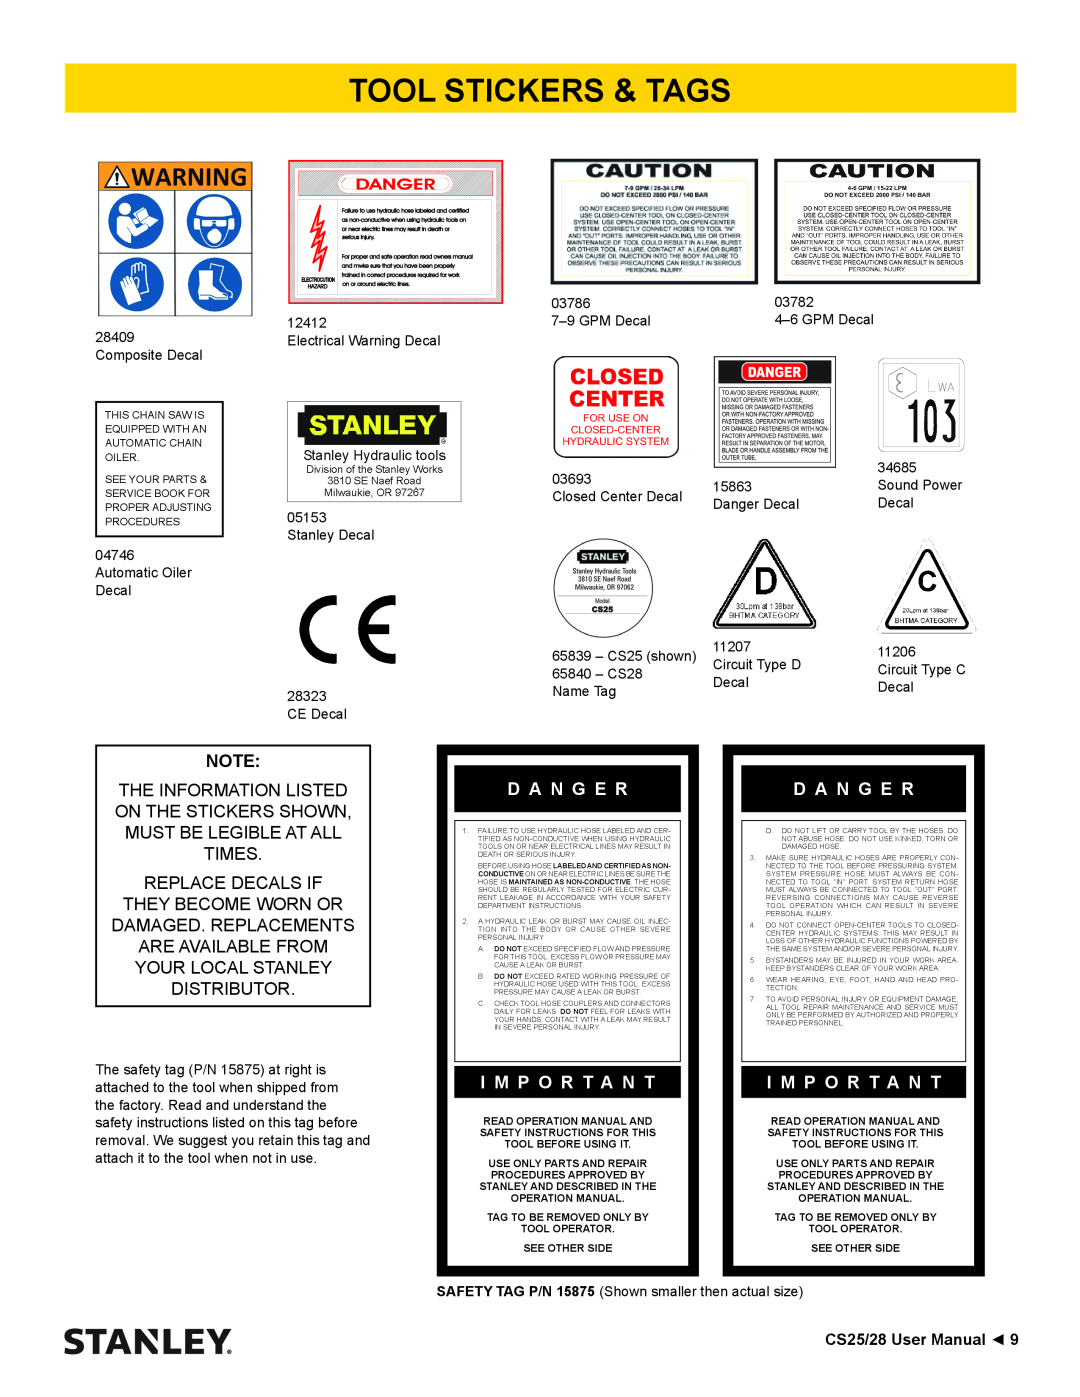 Stanley Black & Decker CS25/28 manual Tool Stickers & Tags, D A N G E R, I M P O R T A N T 